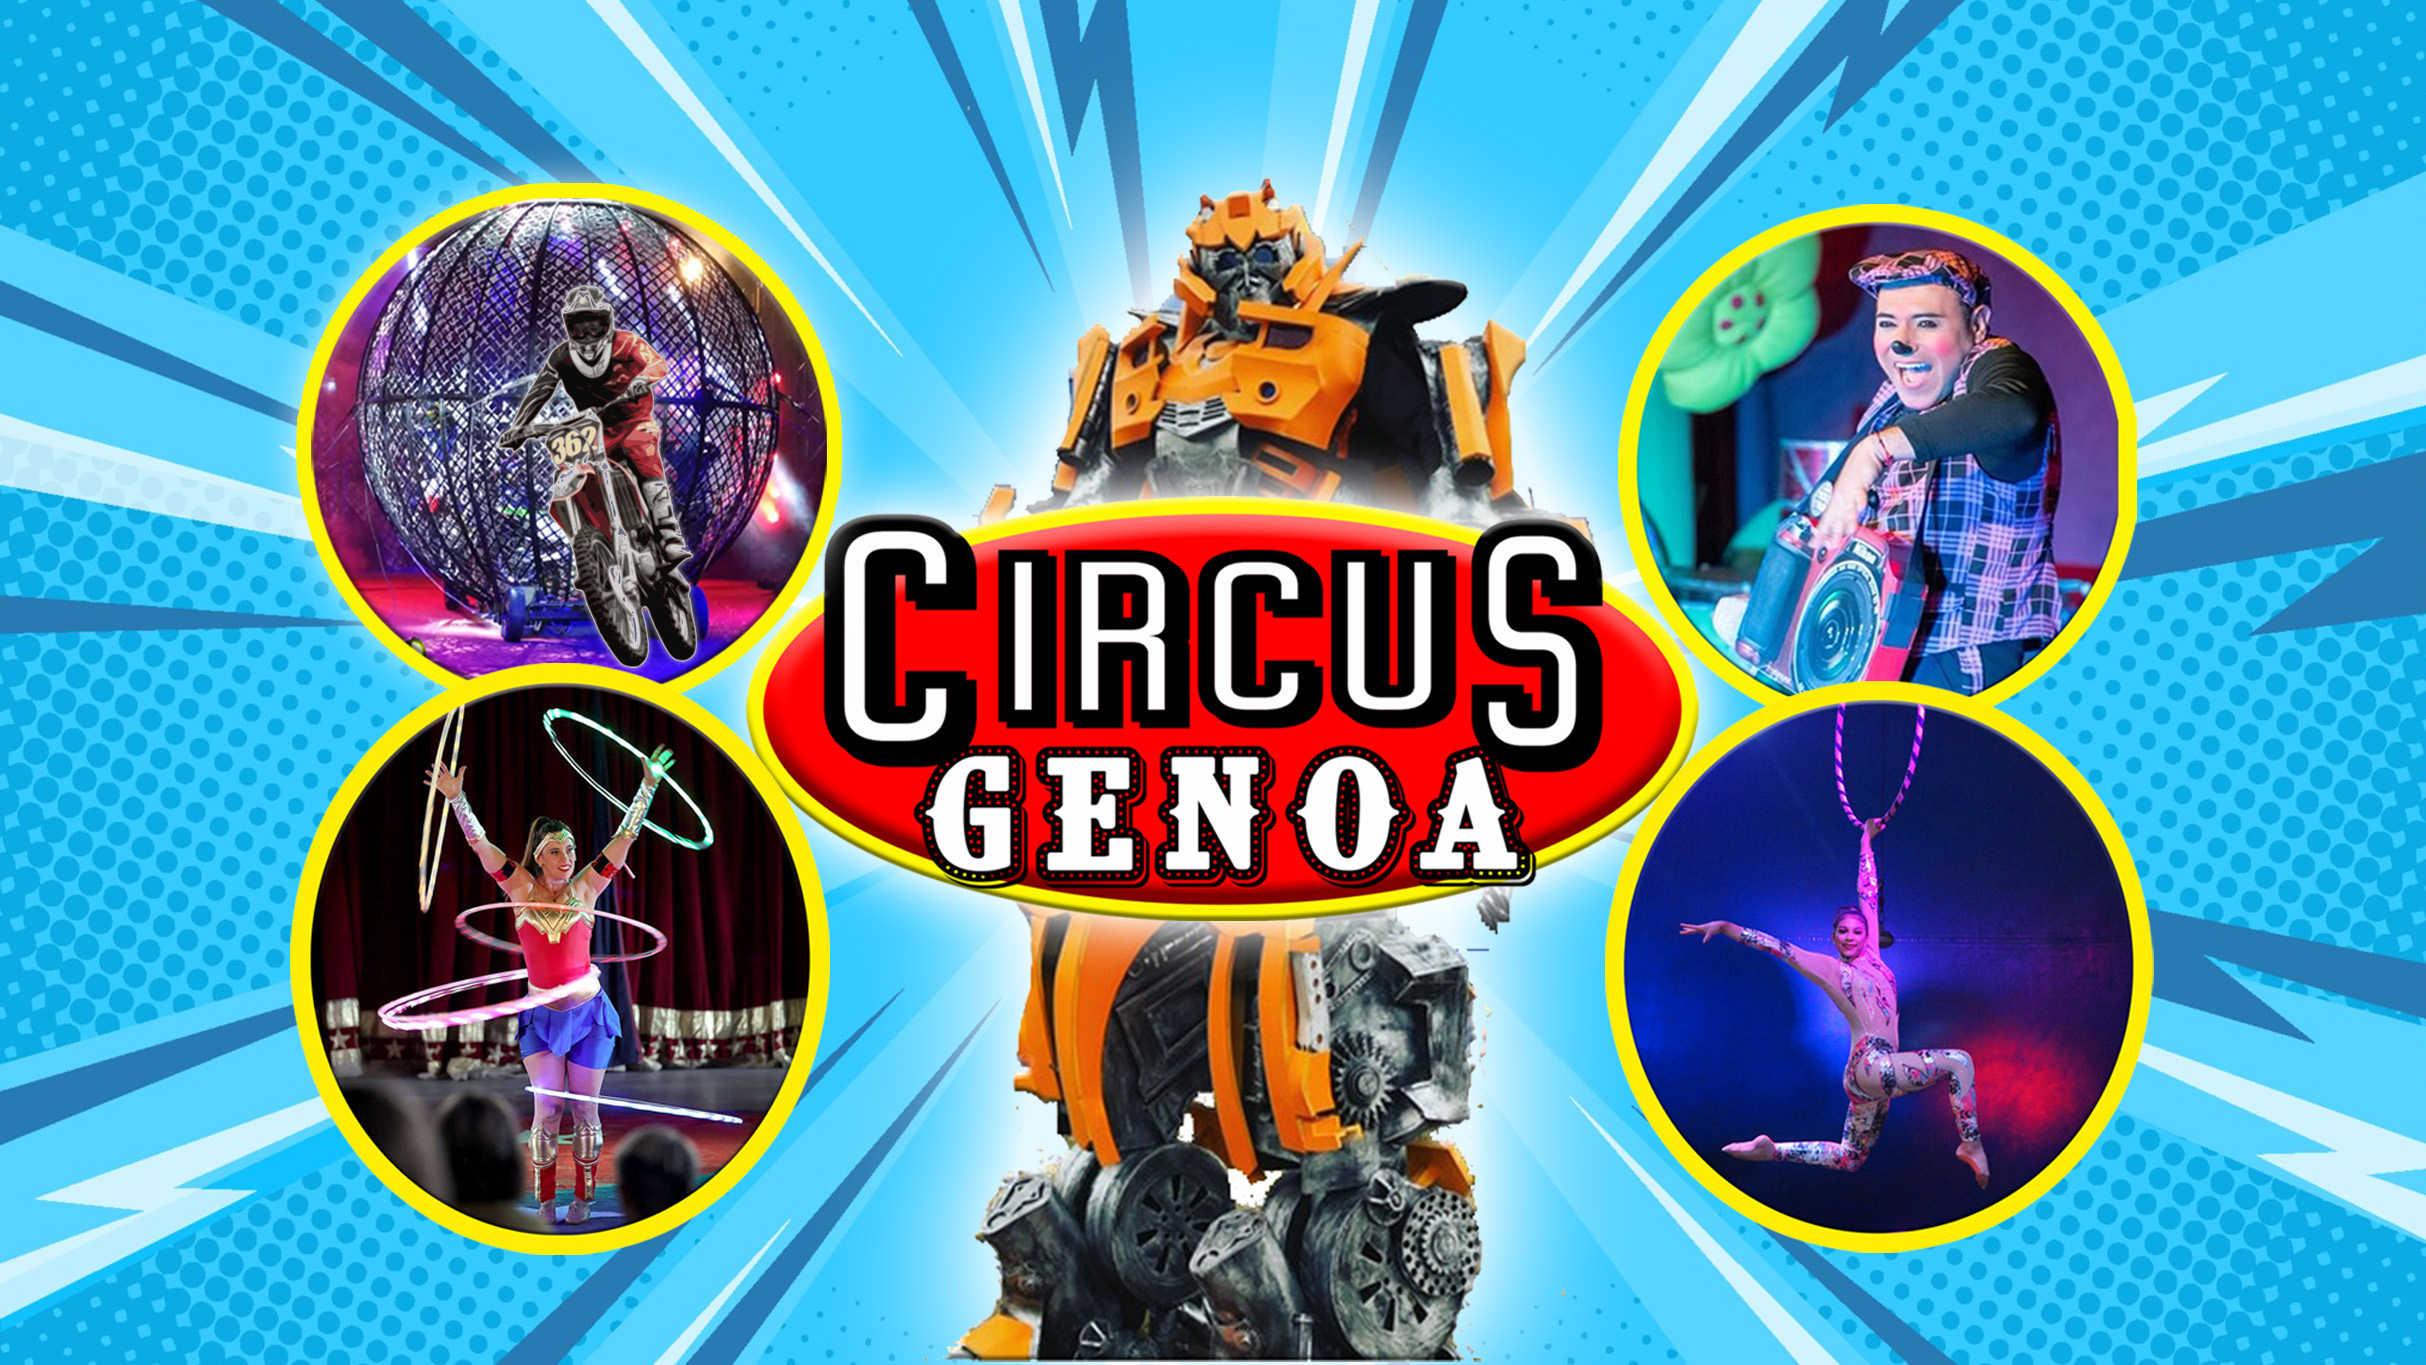 Circus Genoa | ELLIOT LAKE, ONTARIO (May 27)